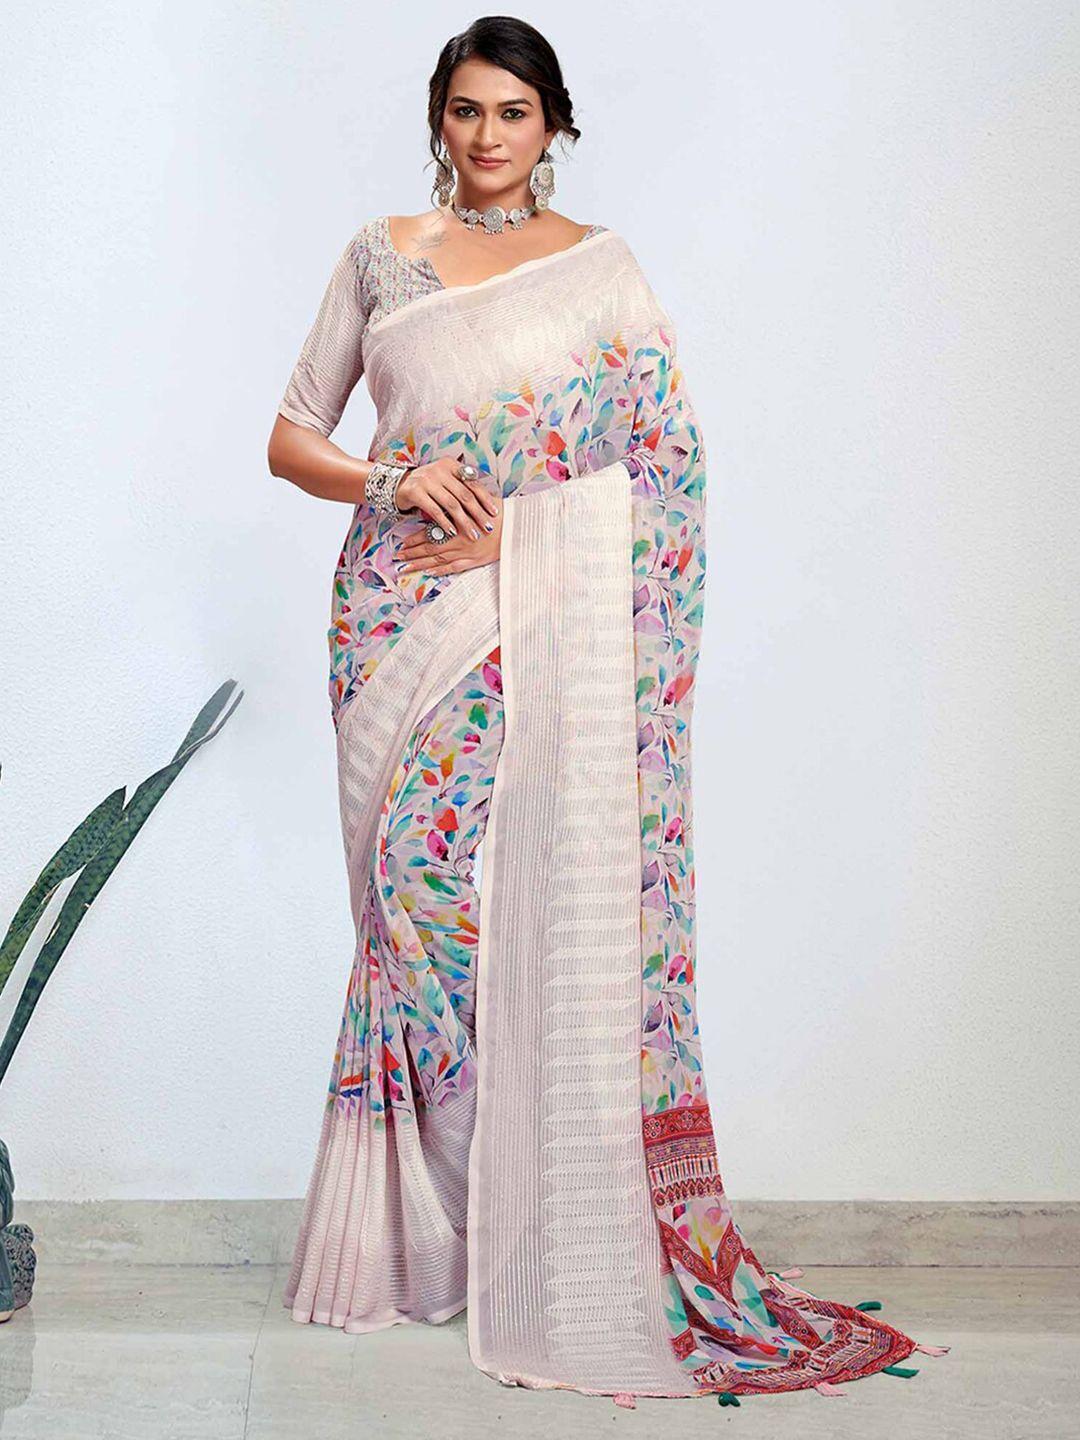 mitera off white floral embroidered pure georgette designer bagh saree